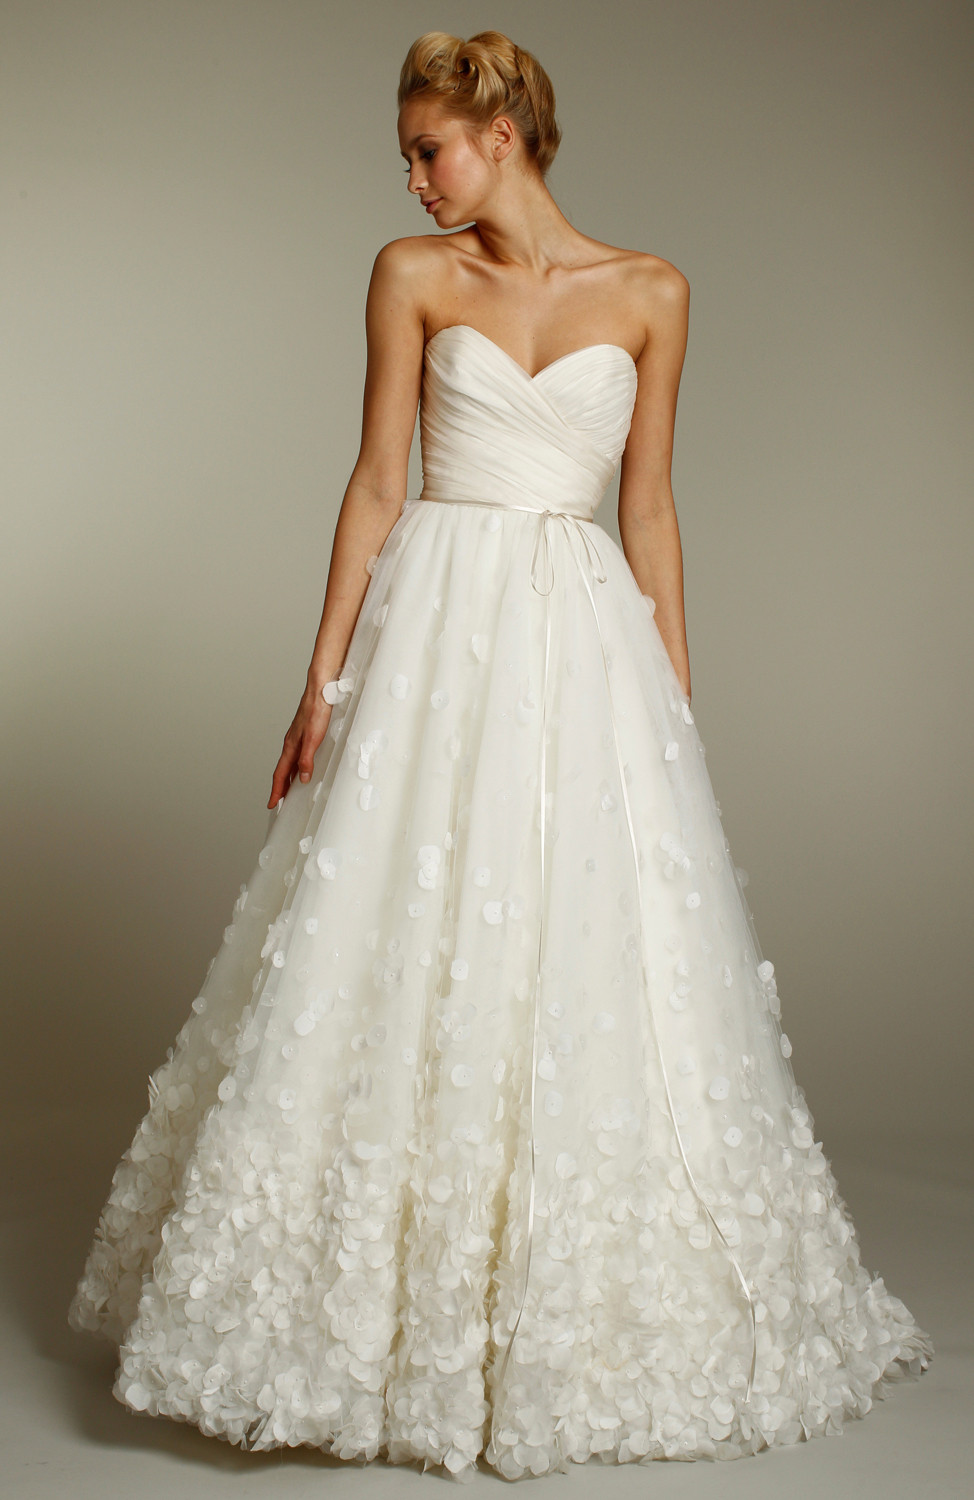 Wedding Dress Sweetheart Neckline
 Ivory a line wedding dress with sweetheart neckline and